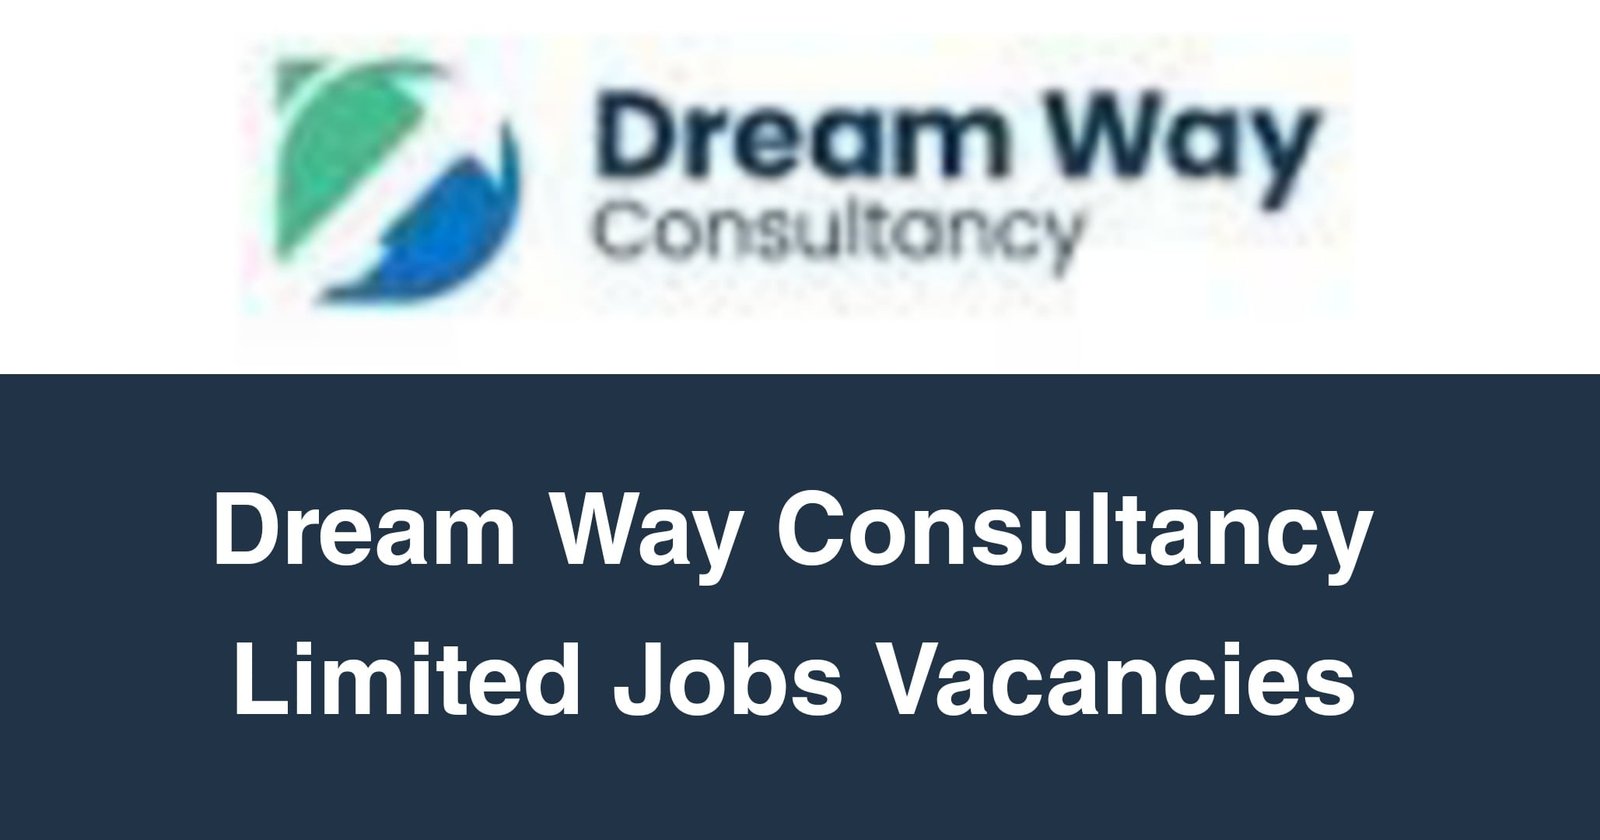 Dream Way Consultancy Limited Jobs Vacancies